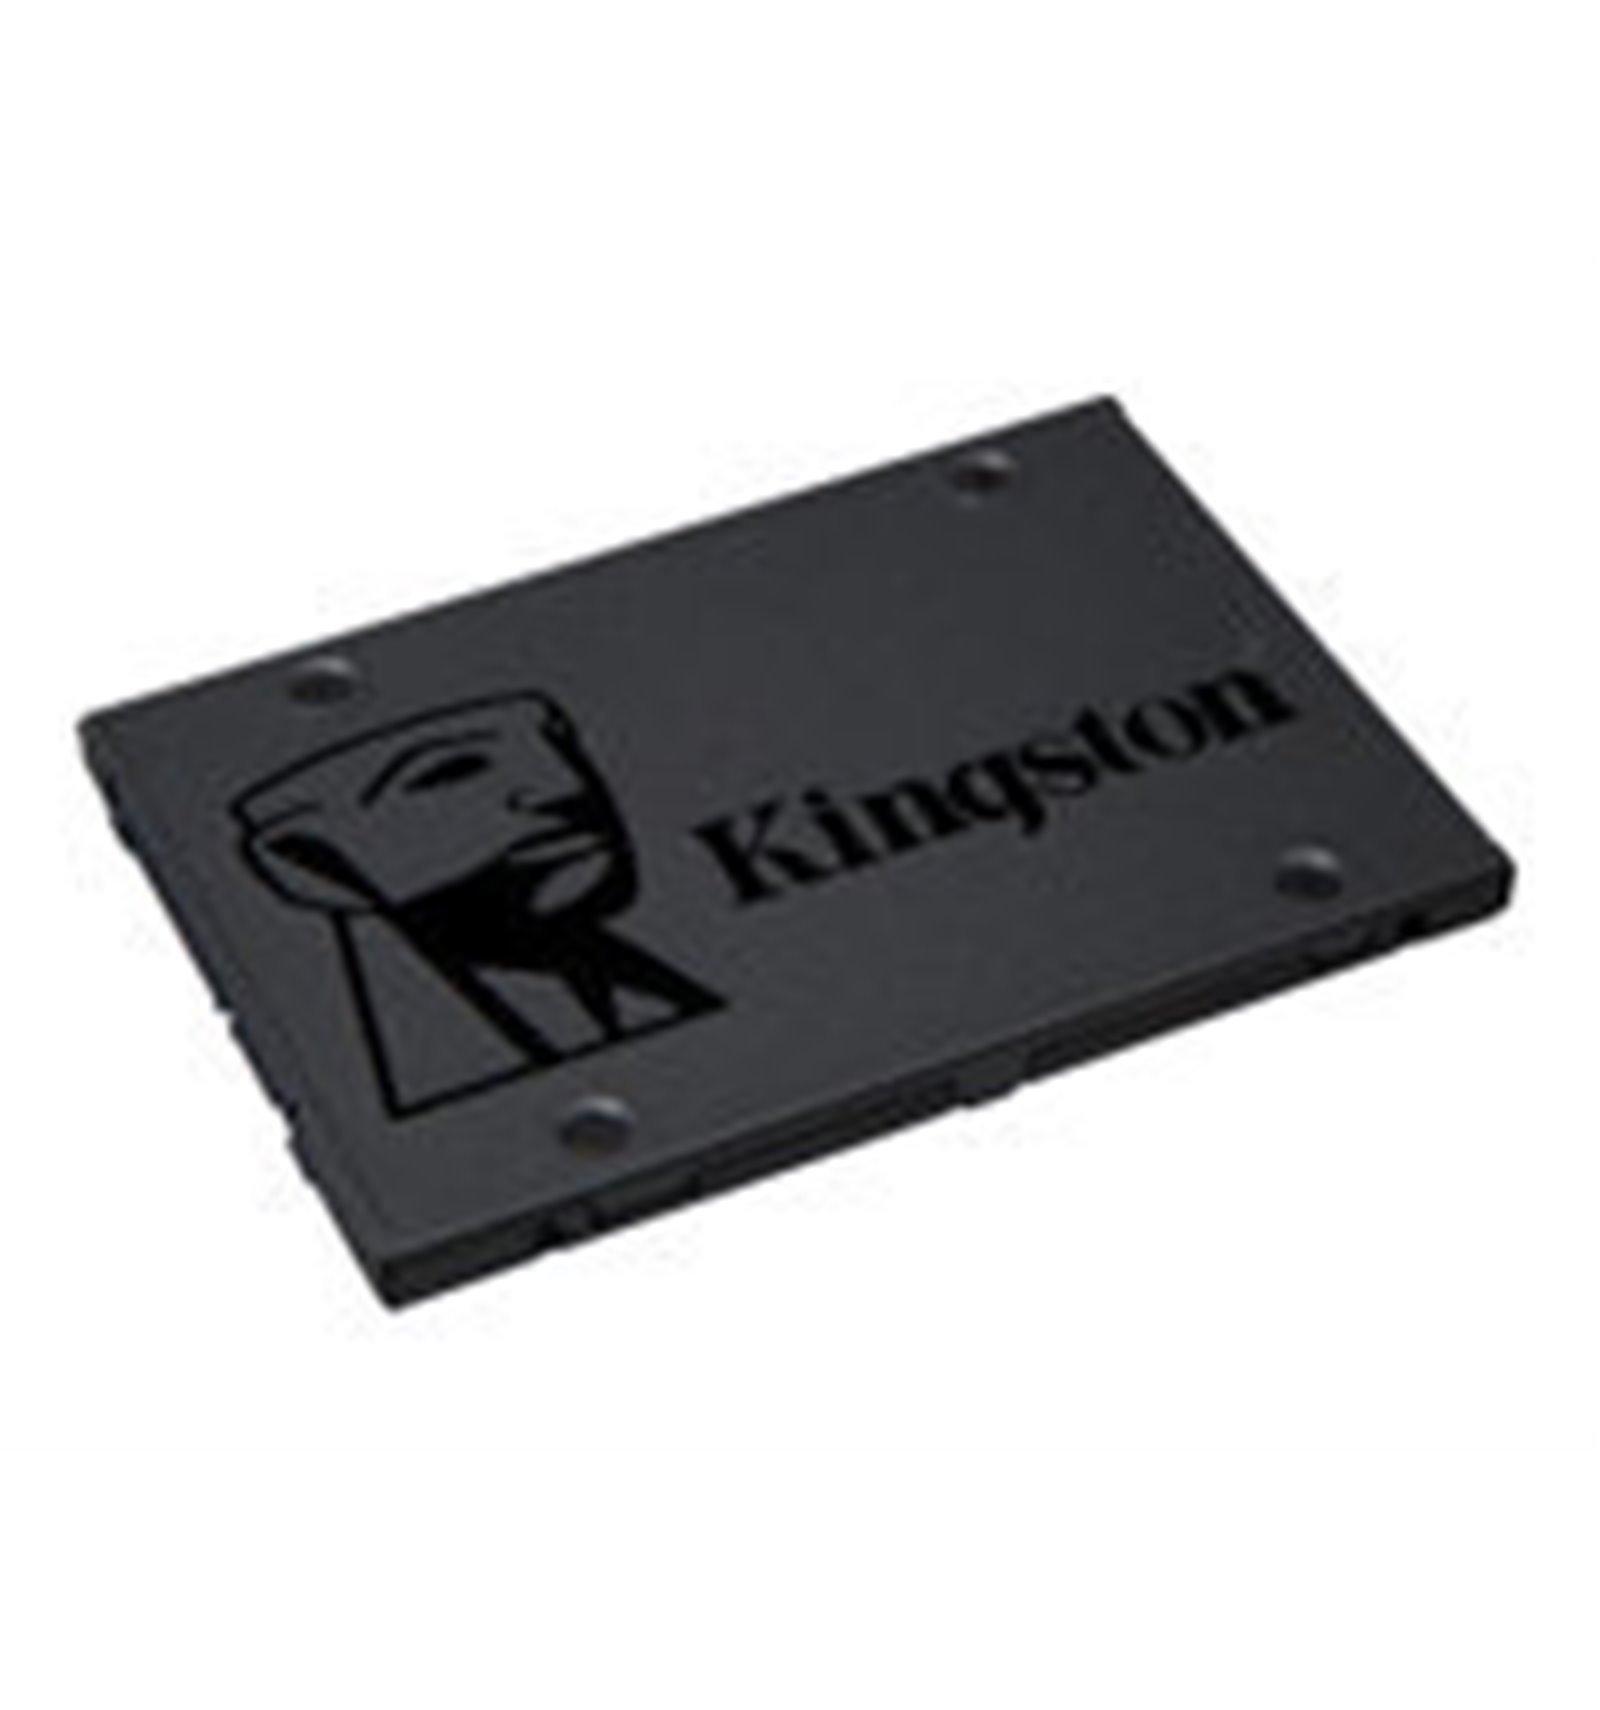 Kingston  SSDNow A400 480GB 